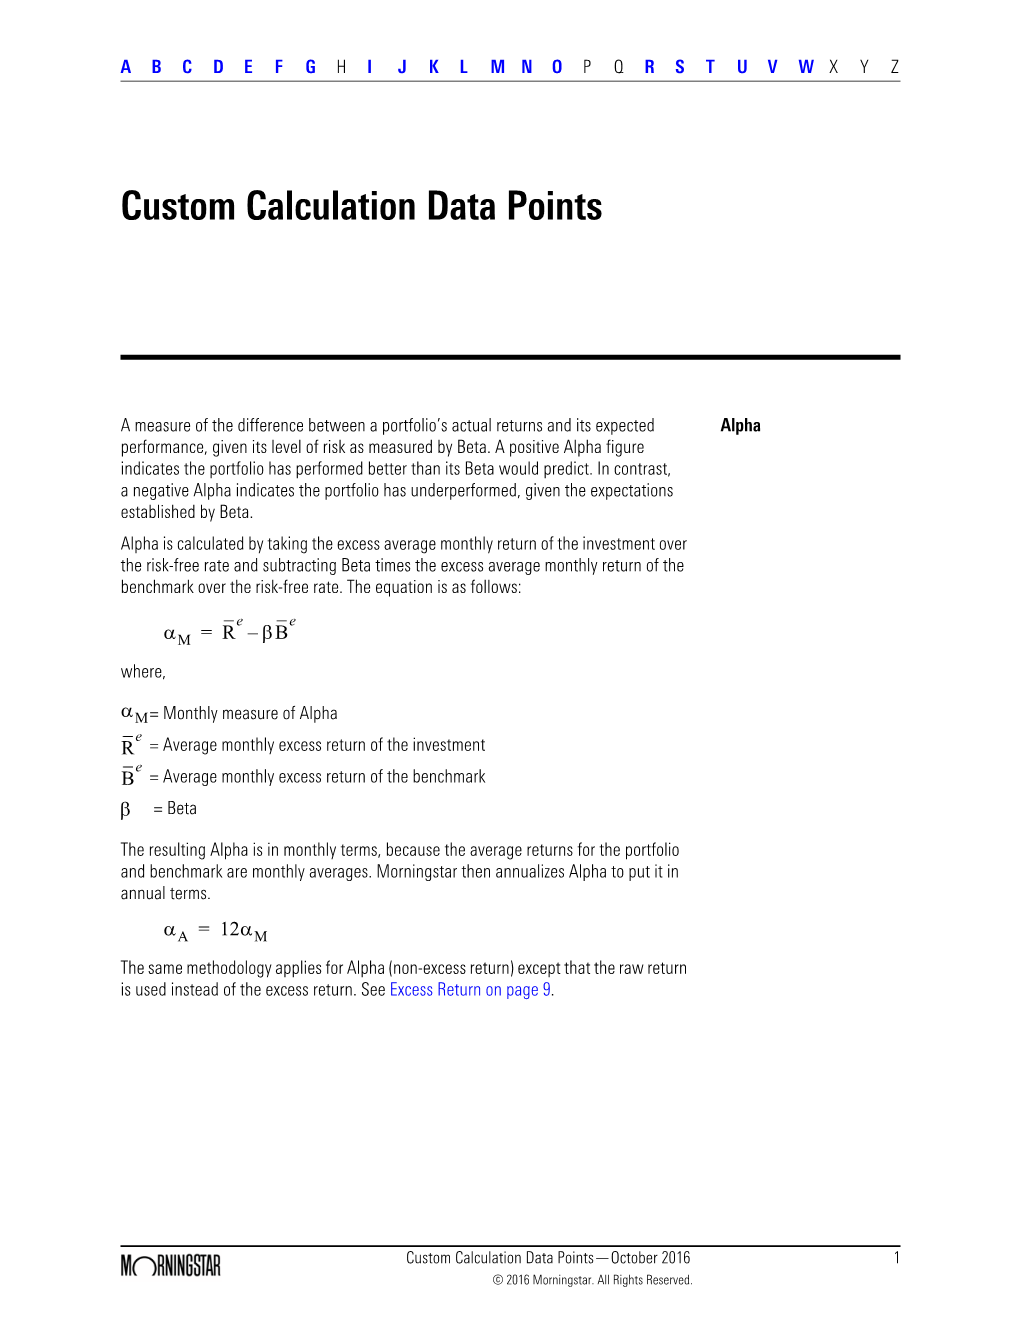 Custom Calculation Data Points